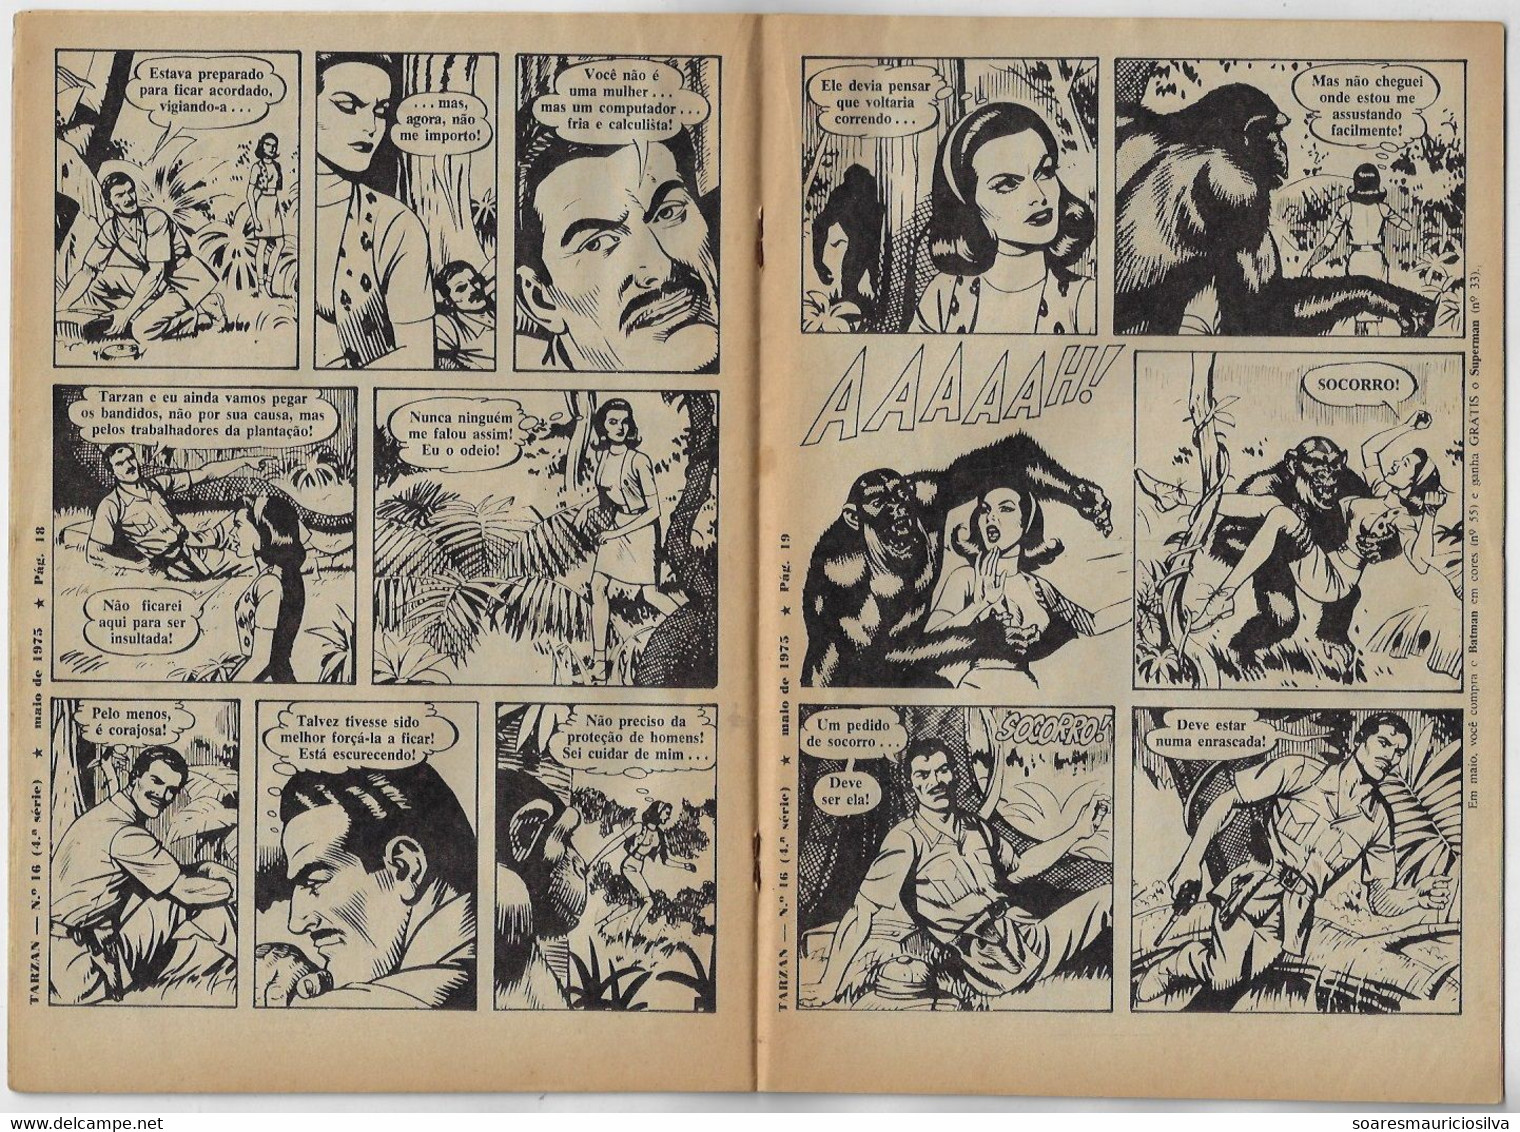 Brazil 1975 Magazine Comic Tarzan Nº 16 4th Series Publisher Ebal 36 Pages In Portuguese Size 18x26cm - BD & Mangas (autres Langues)